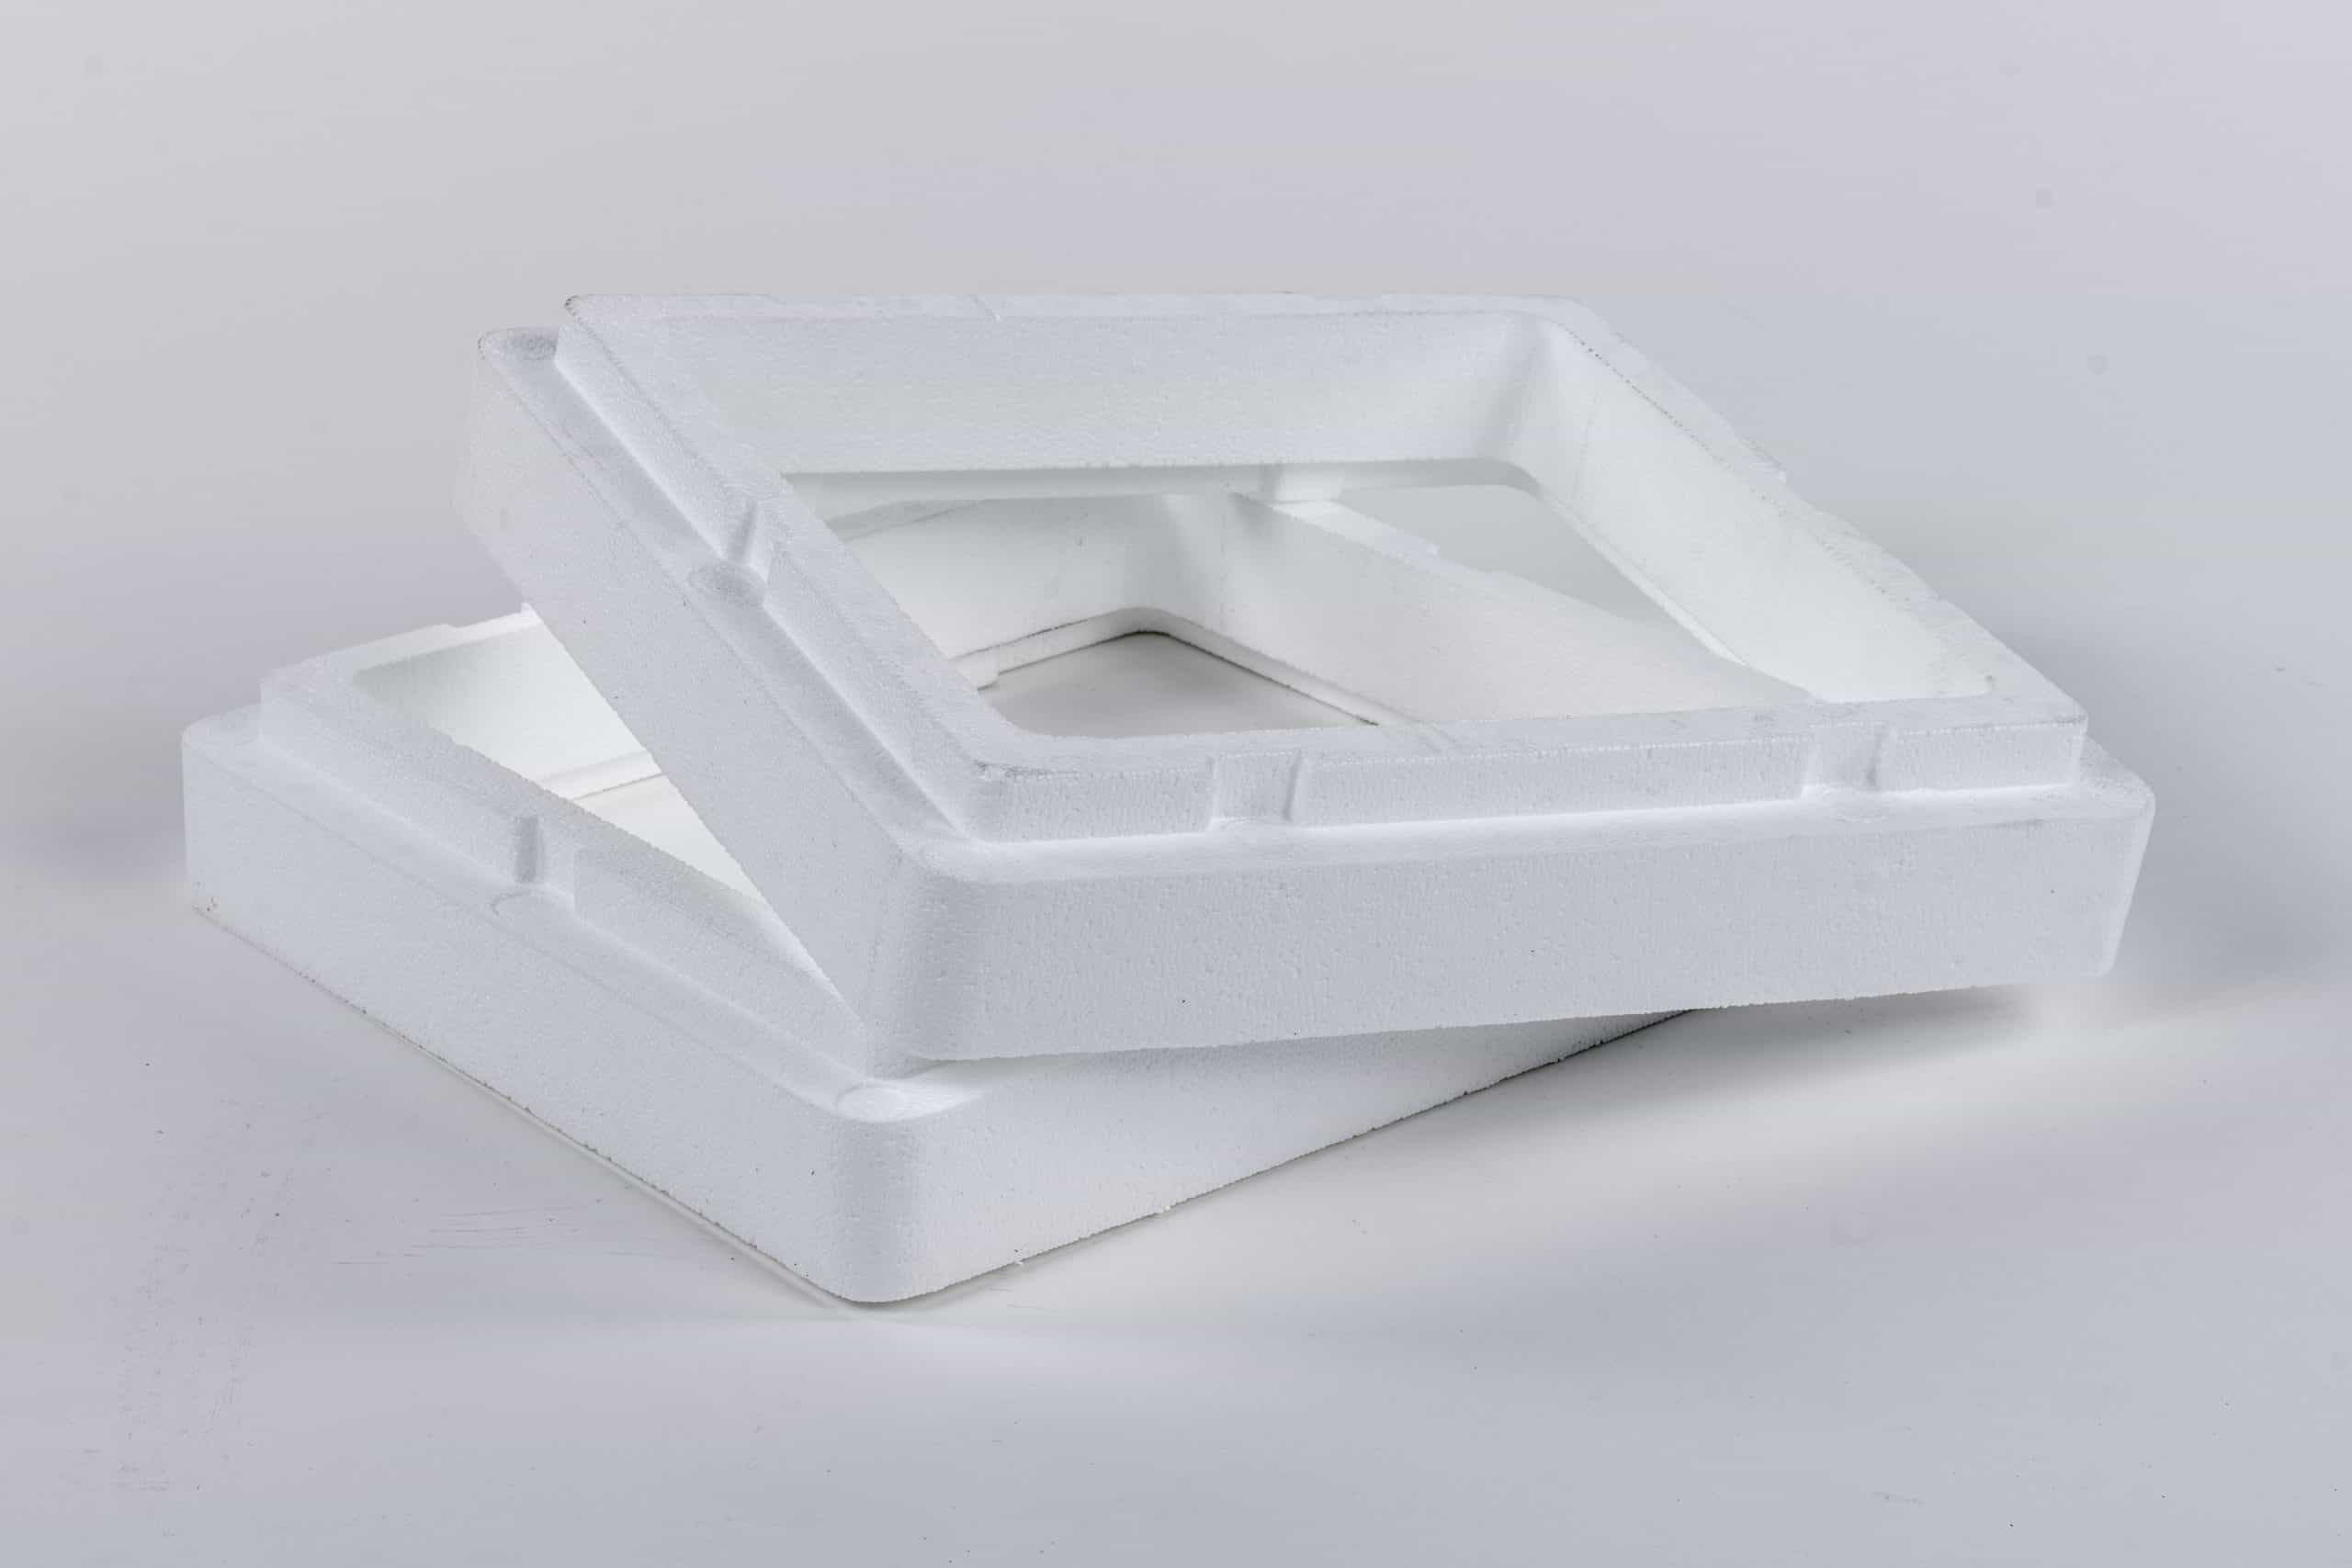  ThermoSafe 398 EPS Foam Multi Purpose Insulated